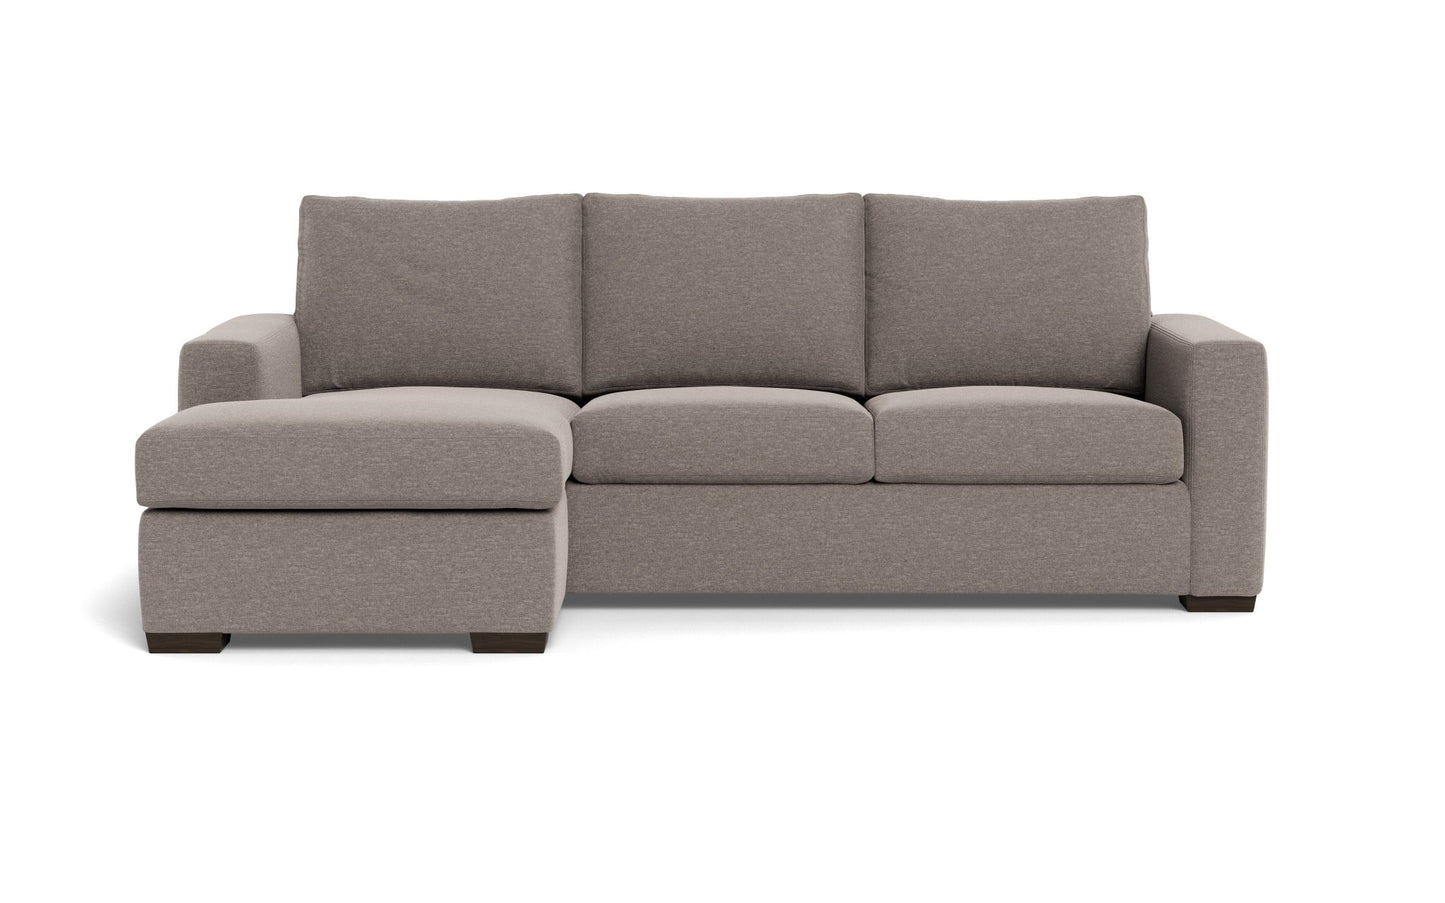 Mesa Reversible Chaise Sofa - Bennett Praline